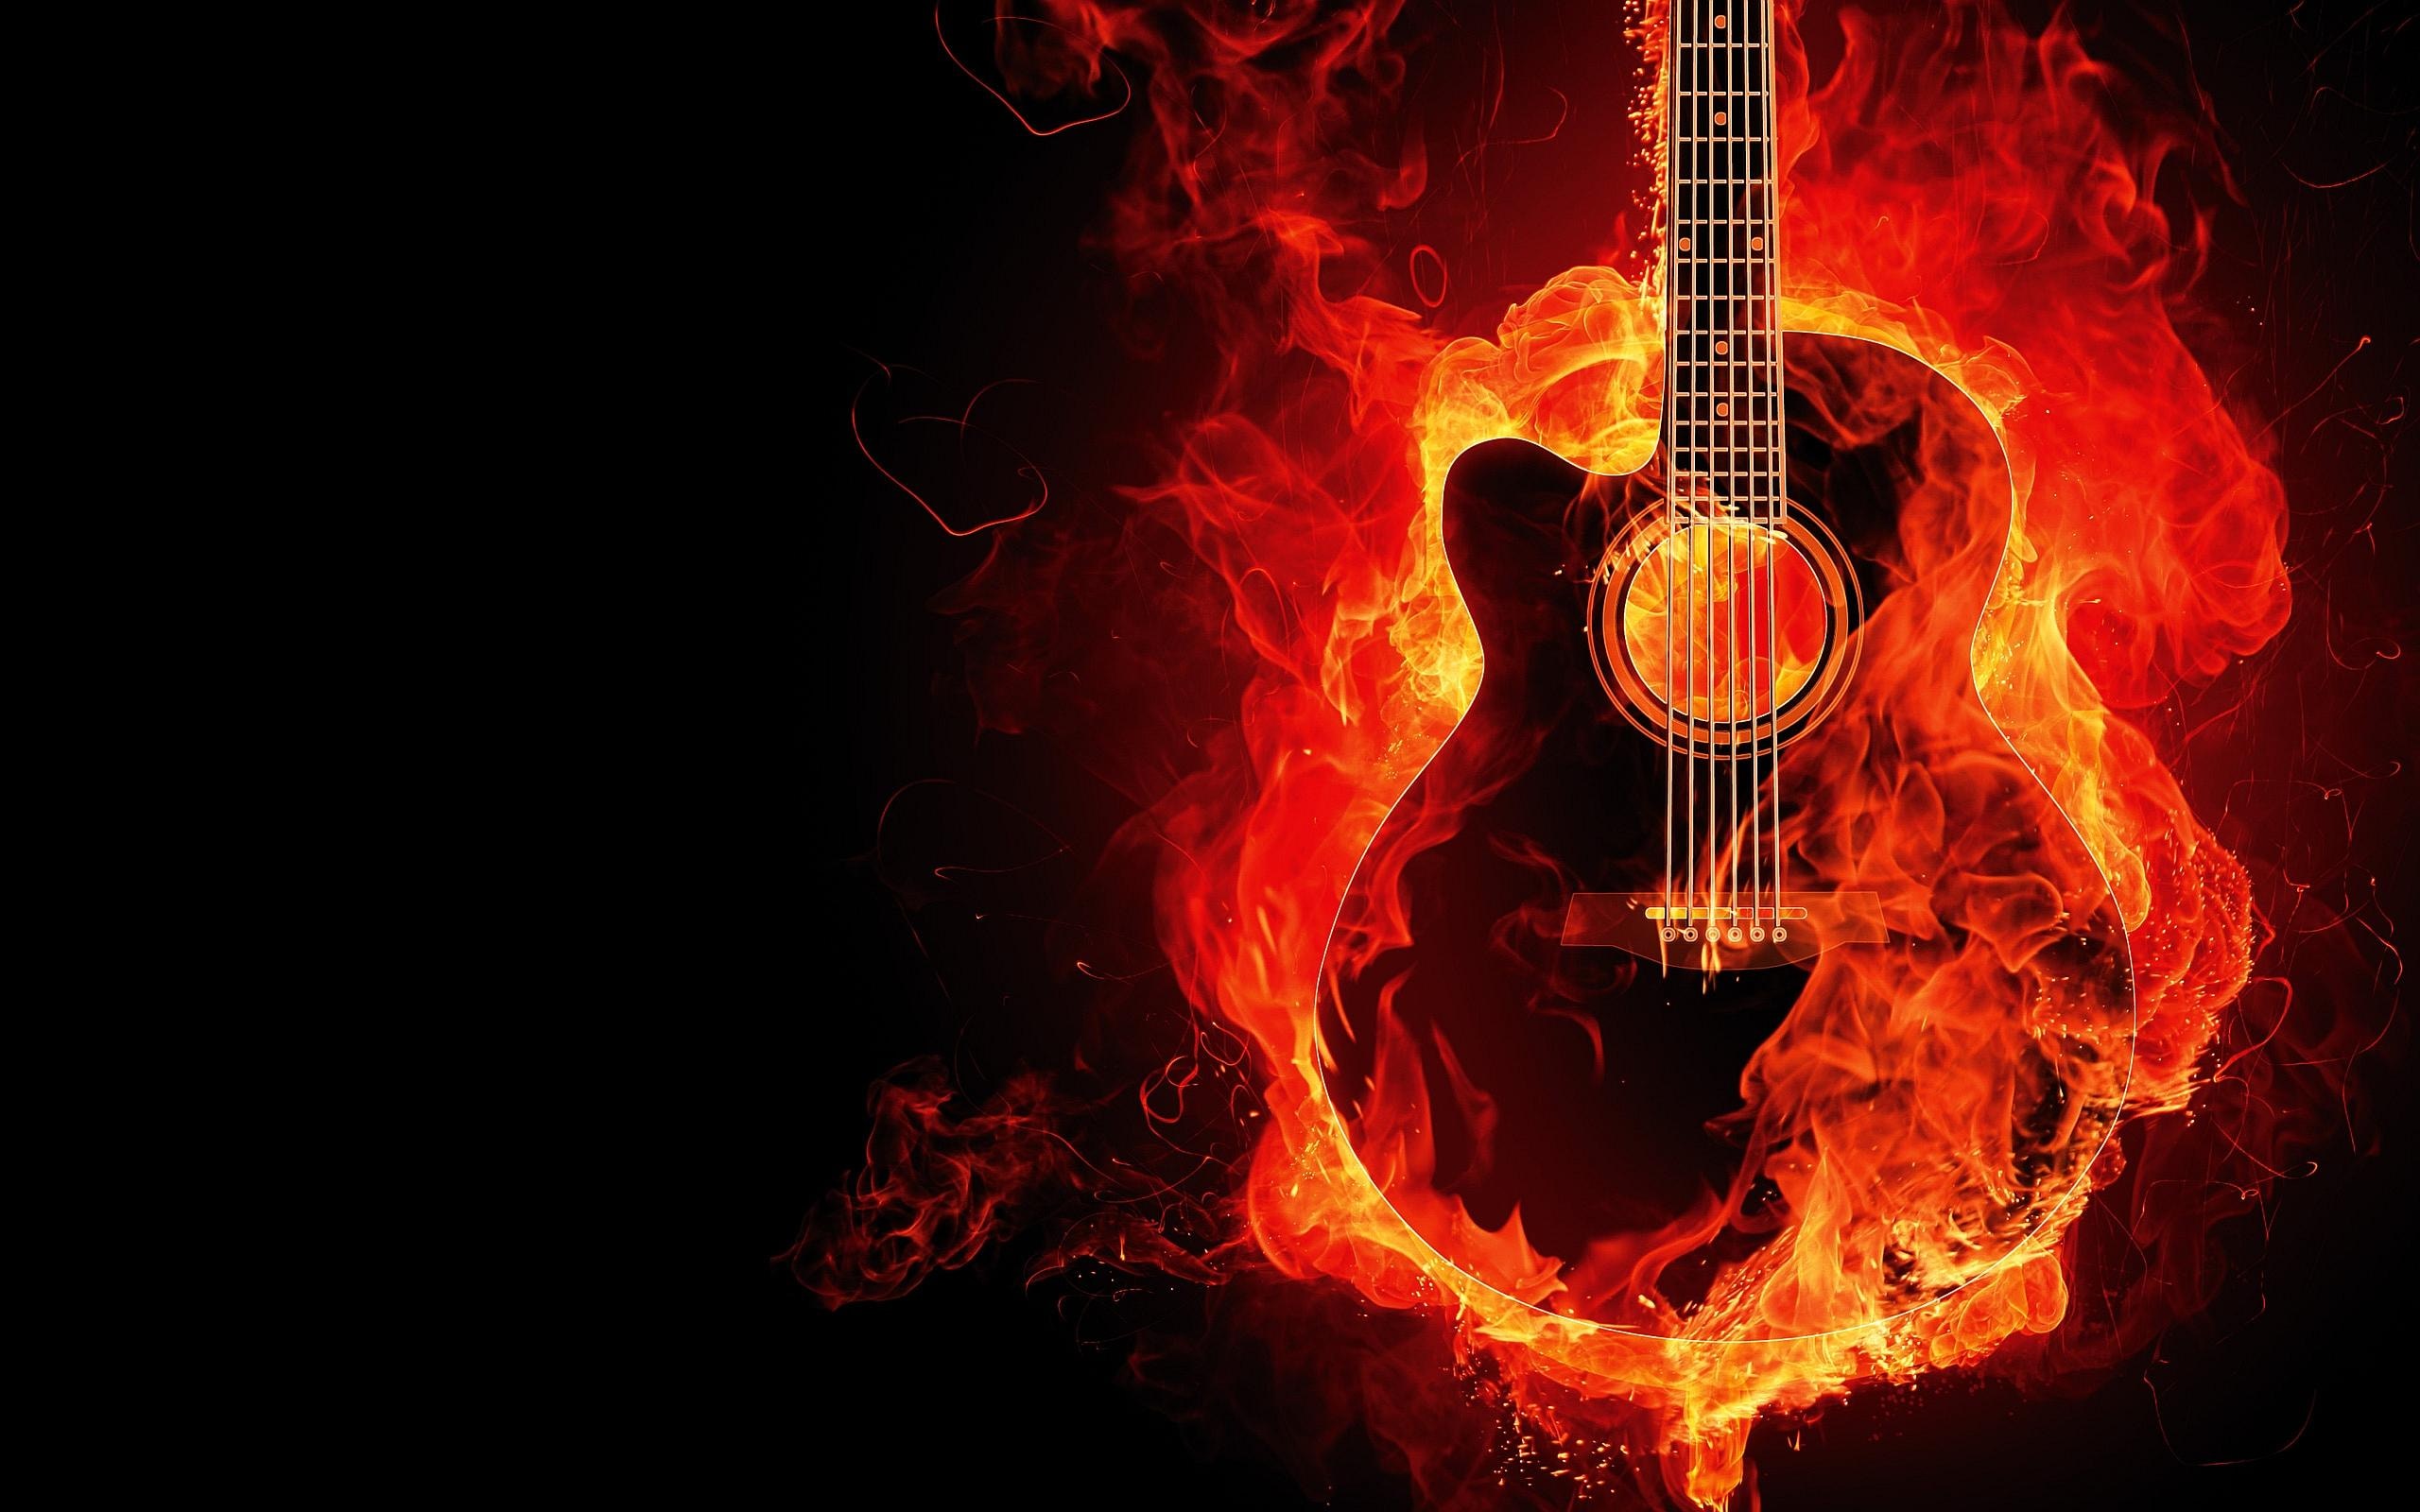 burning guitar